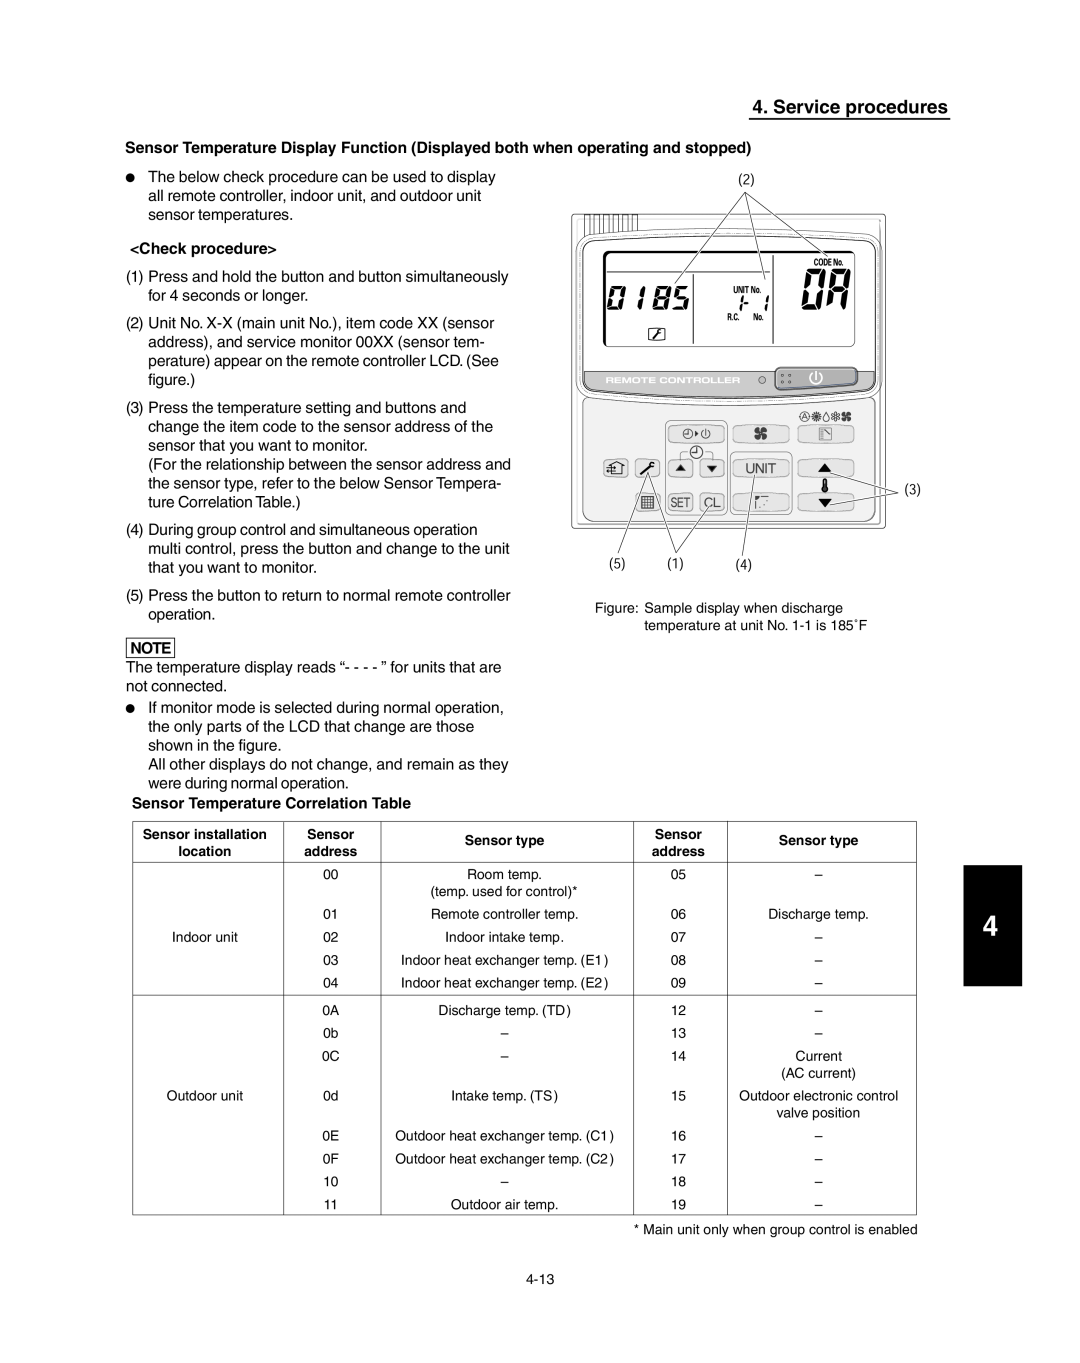 Panasonic R410A Service procedures, <Check procedure>, Sensor Temperature Correlation Table, Sensor installation, location 